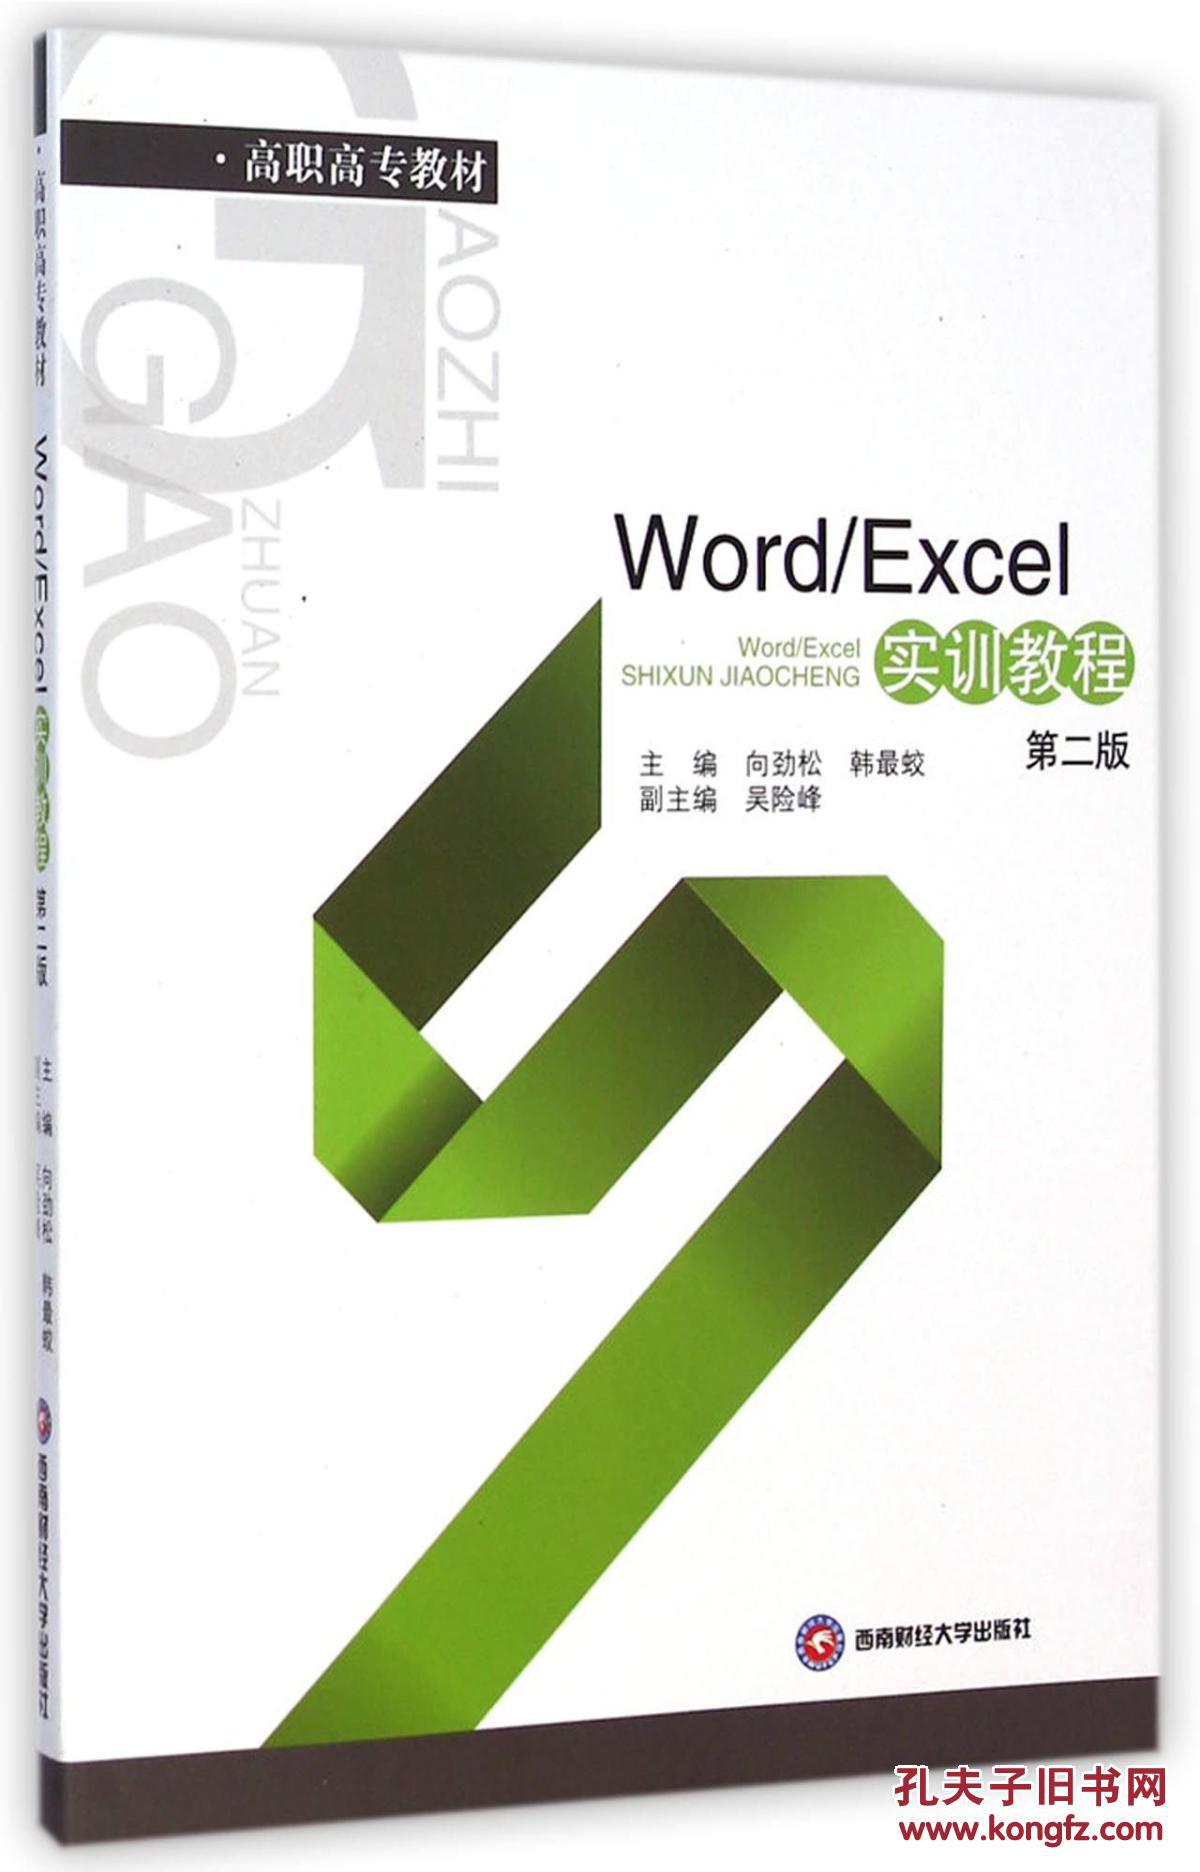 【图】【正版6012】: Word\/Excel 实训教程 97